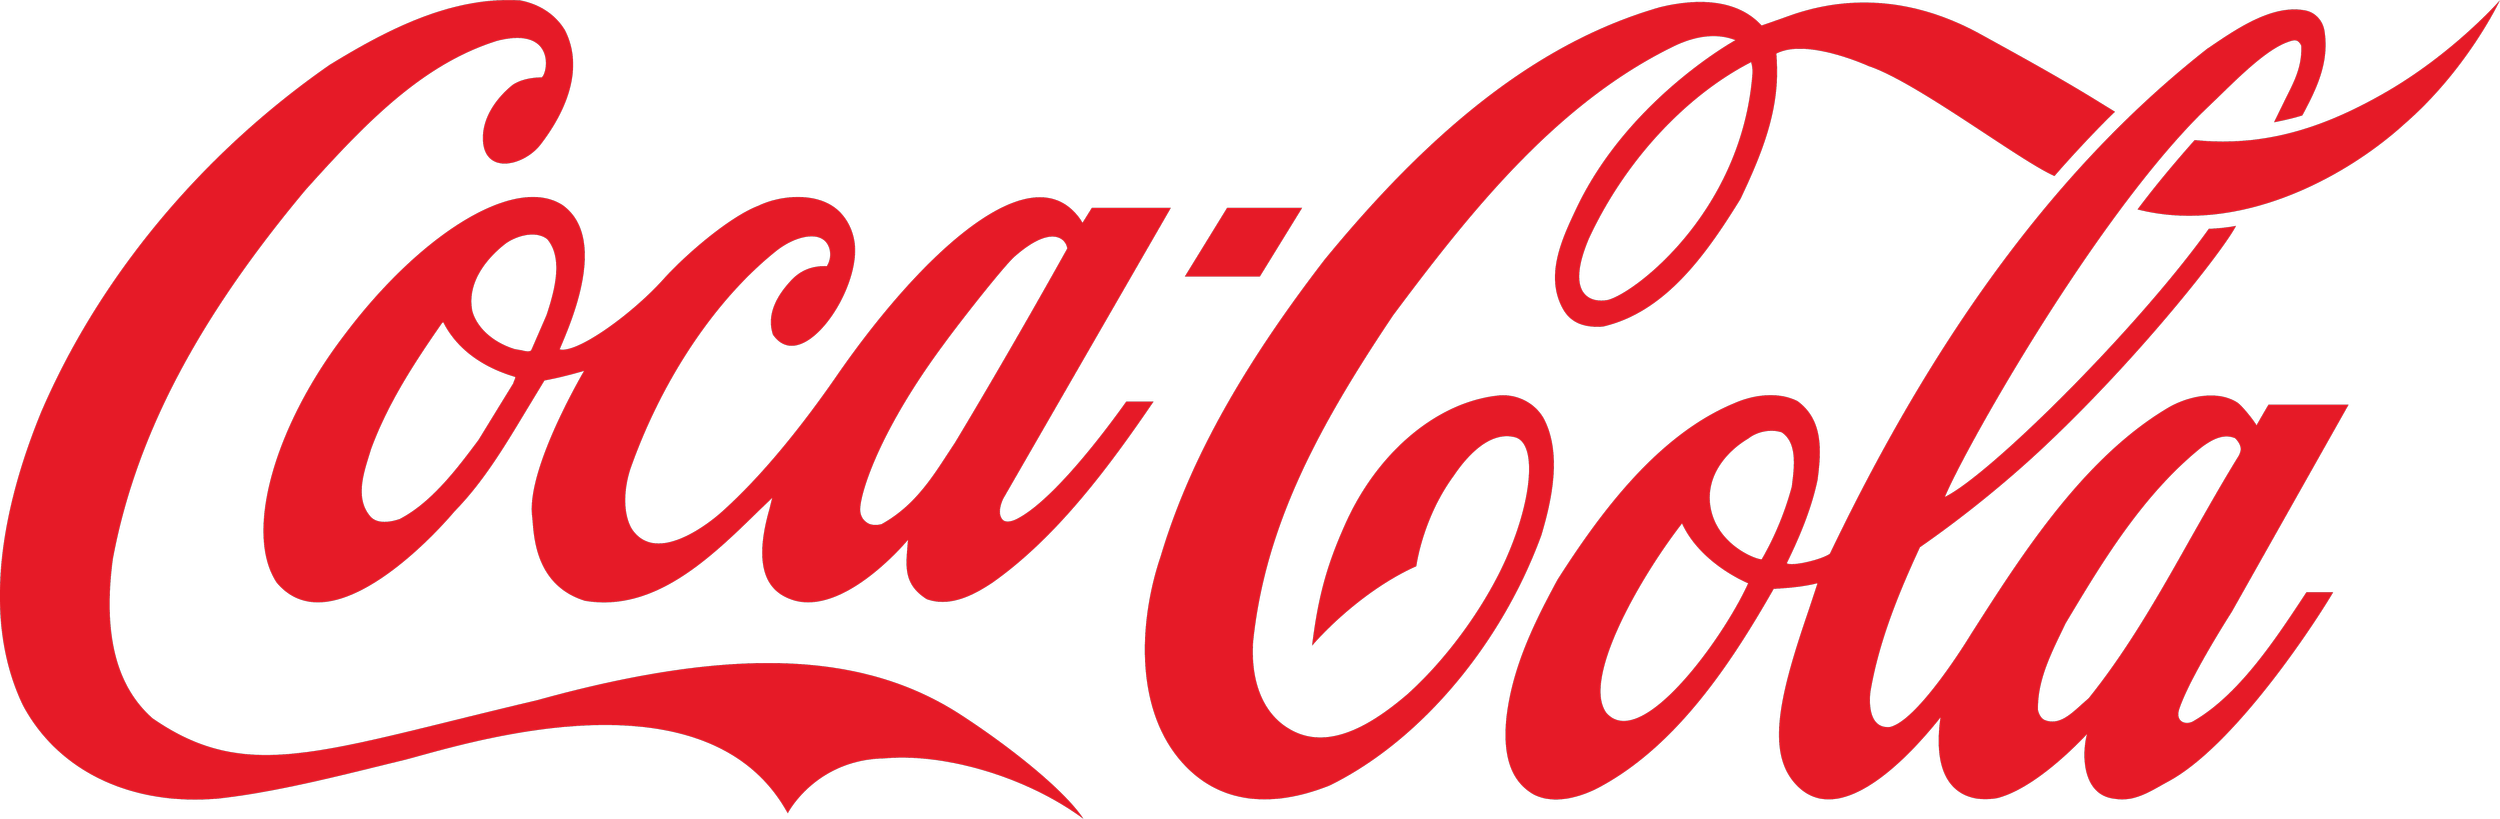 coca-cola-logo-vector copy.png